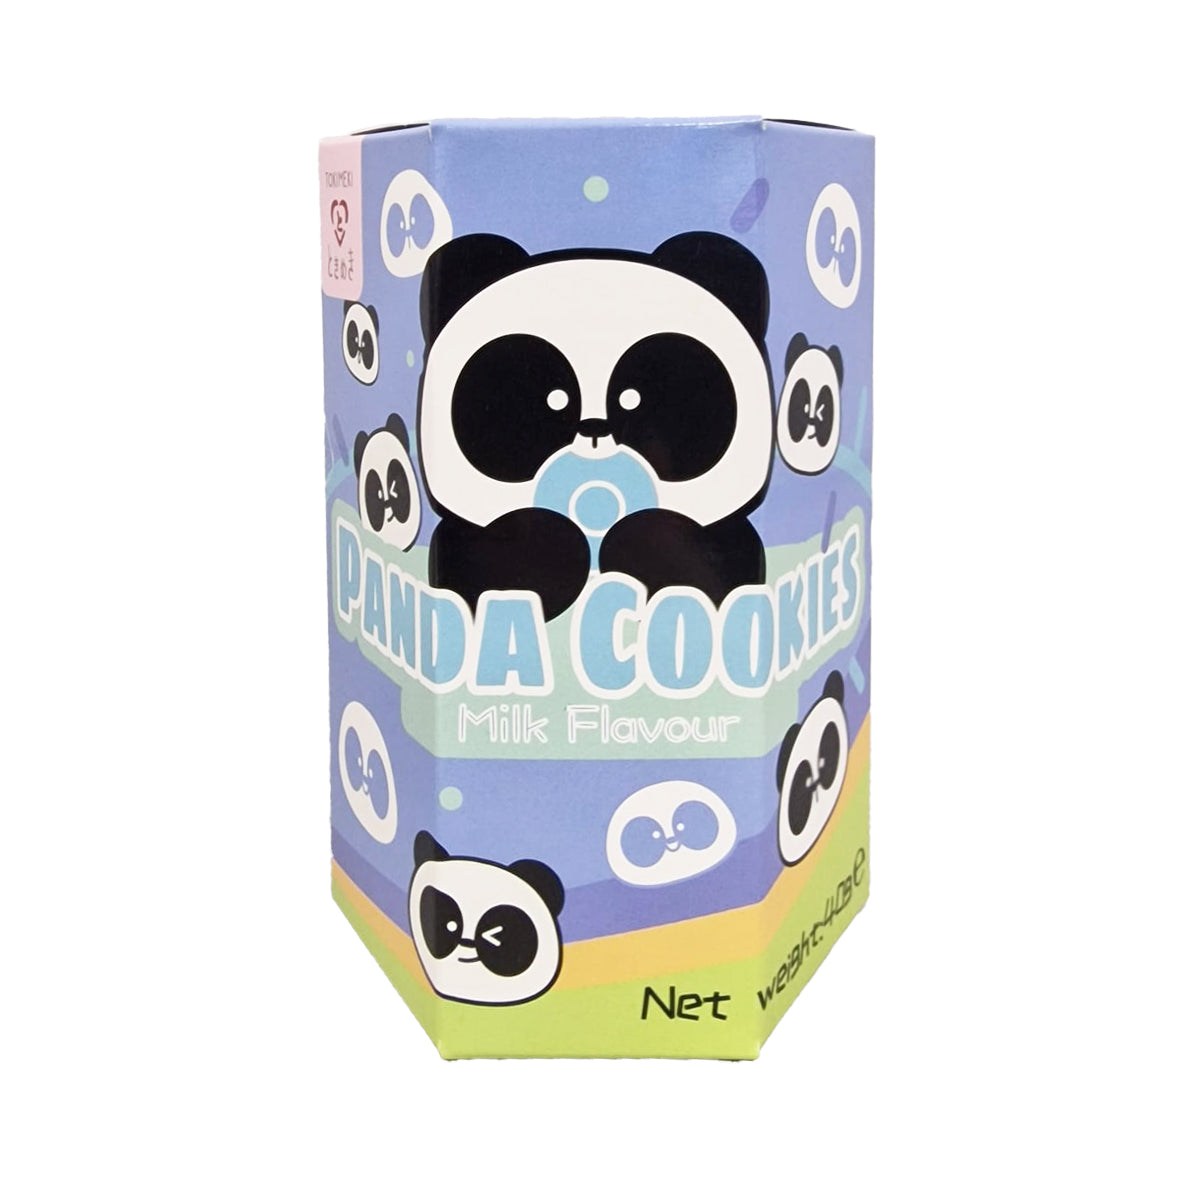 Panda Cookies - Milk Flavour